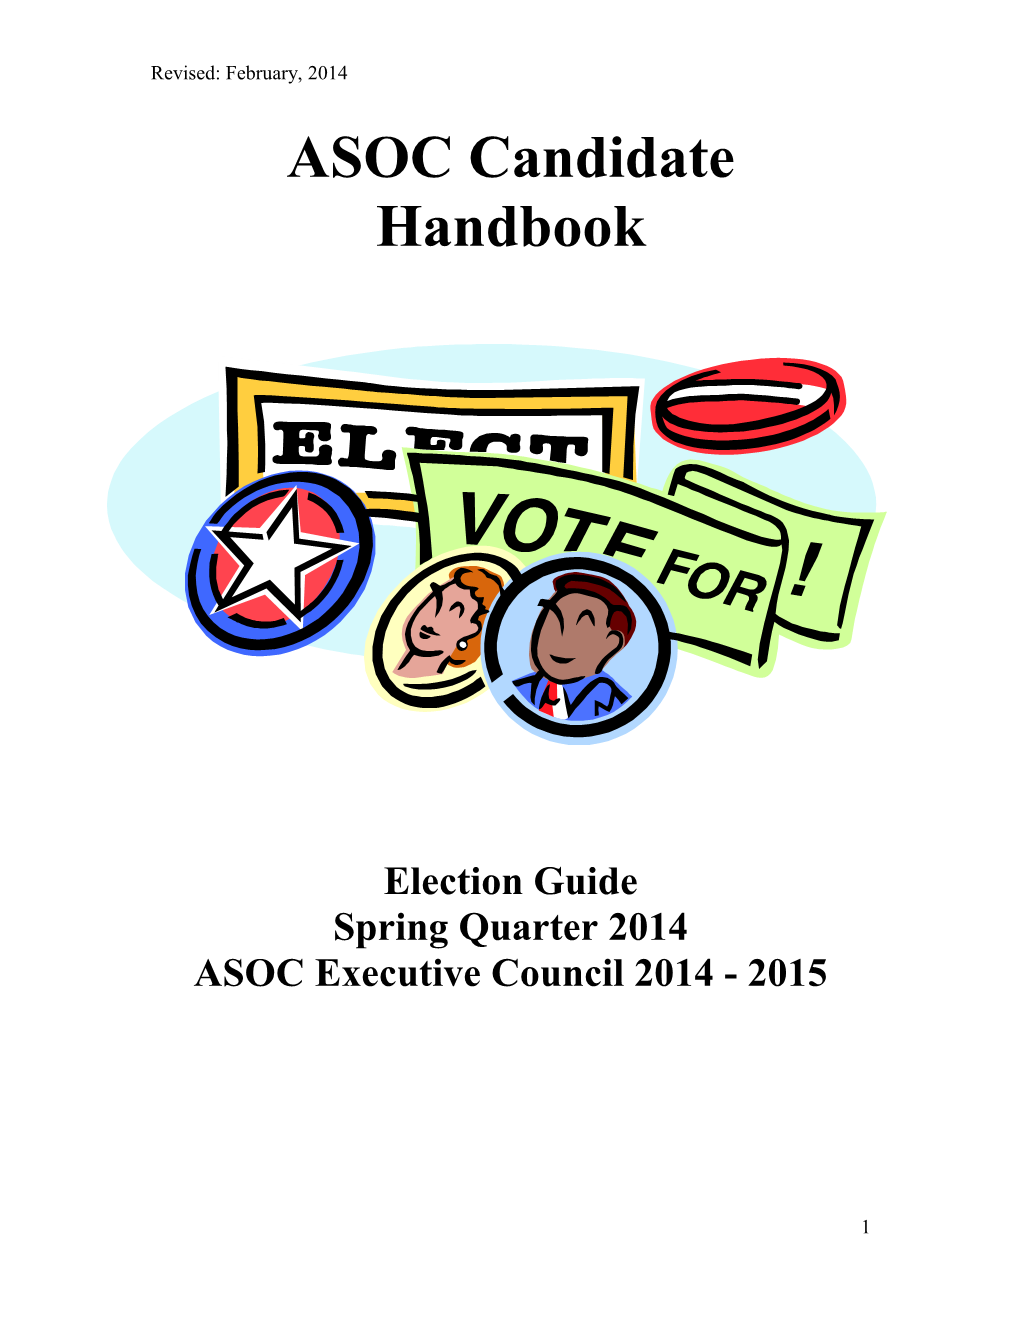 ASOC Candidate Handbook